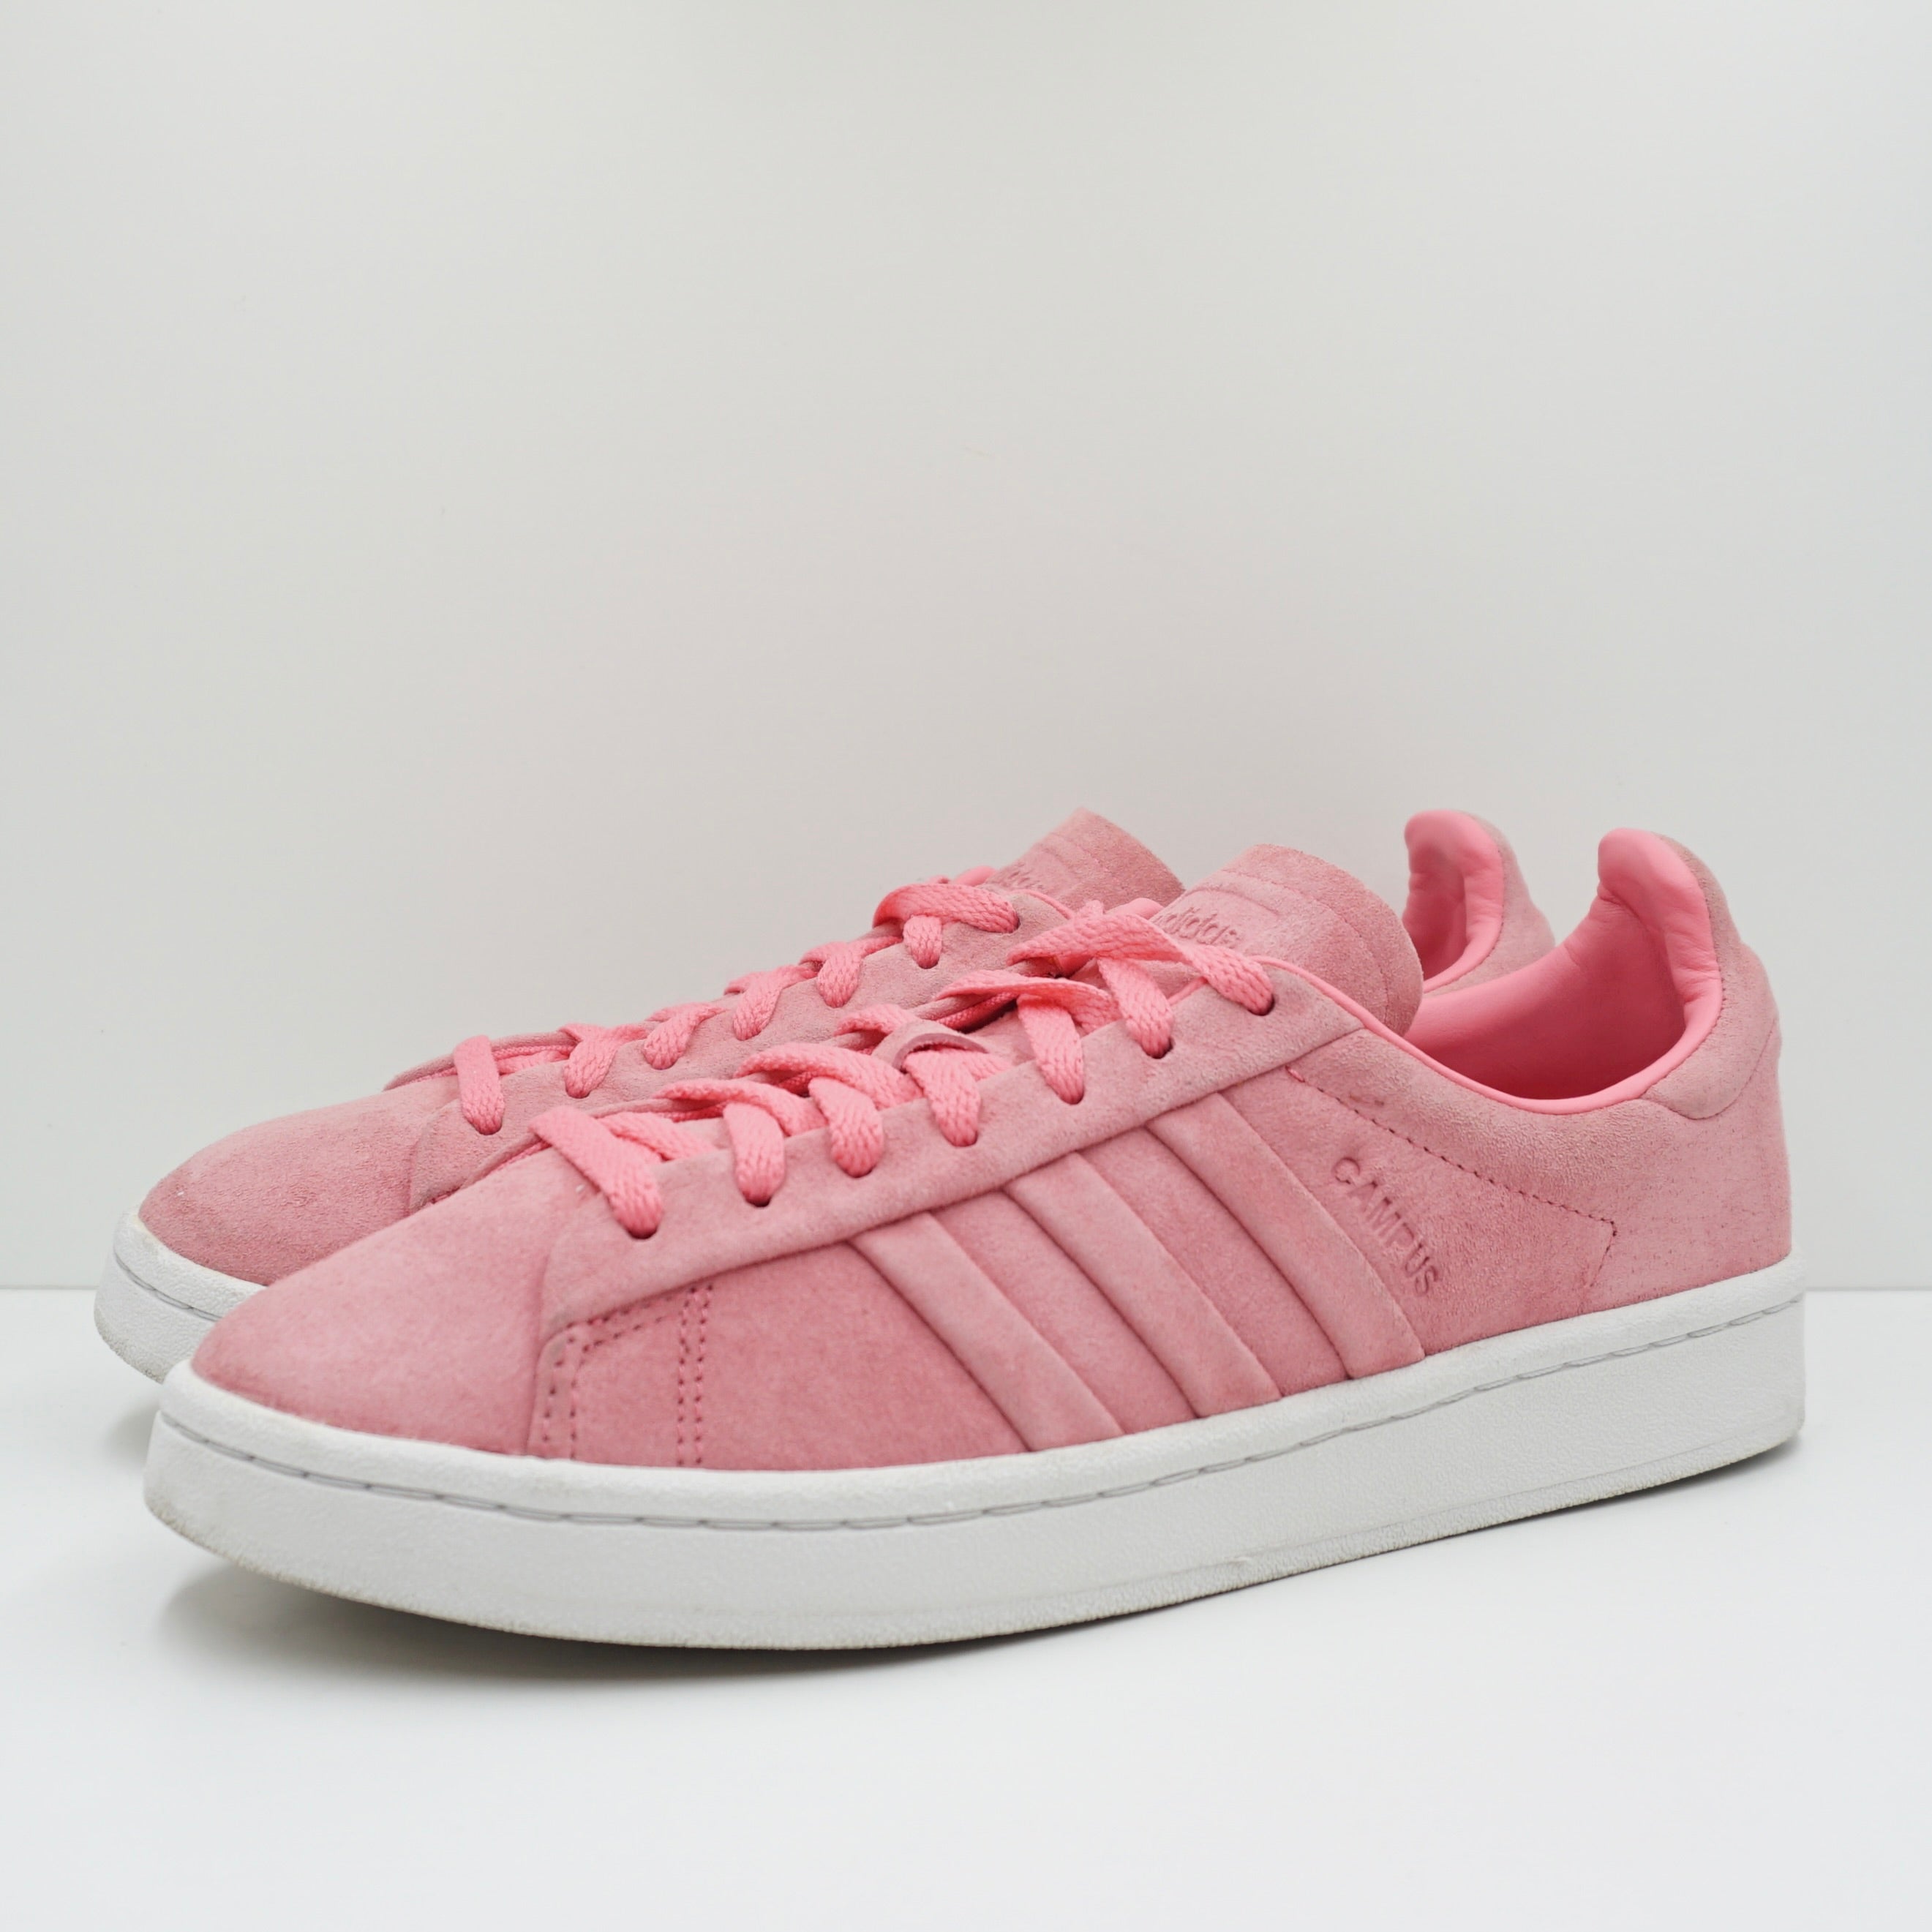 Adidas Campus Stitch and Turn Pink (W)